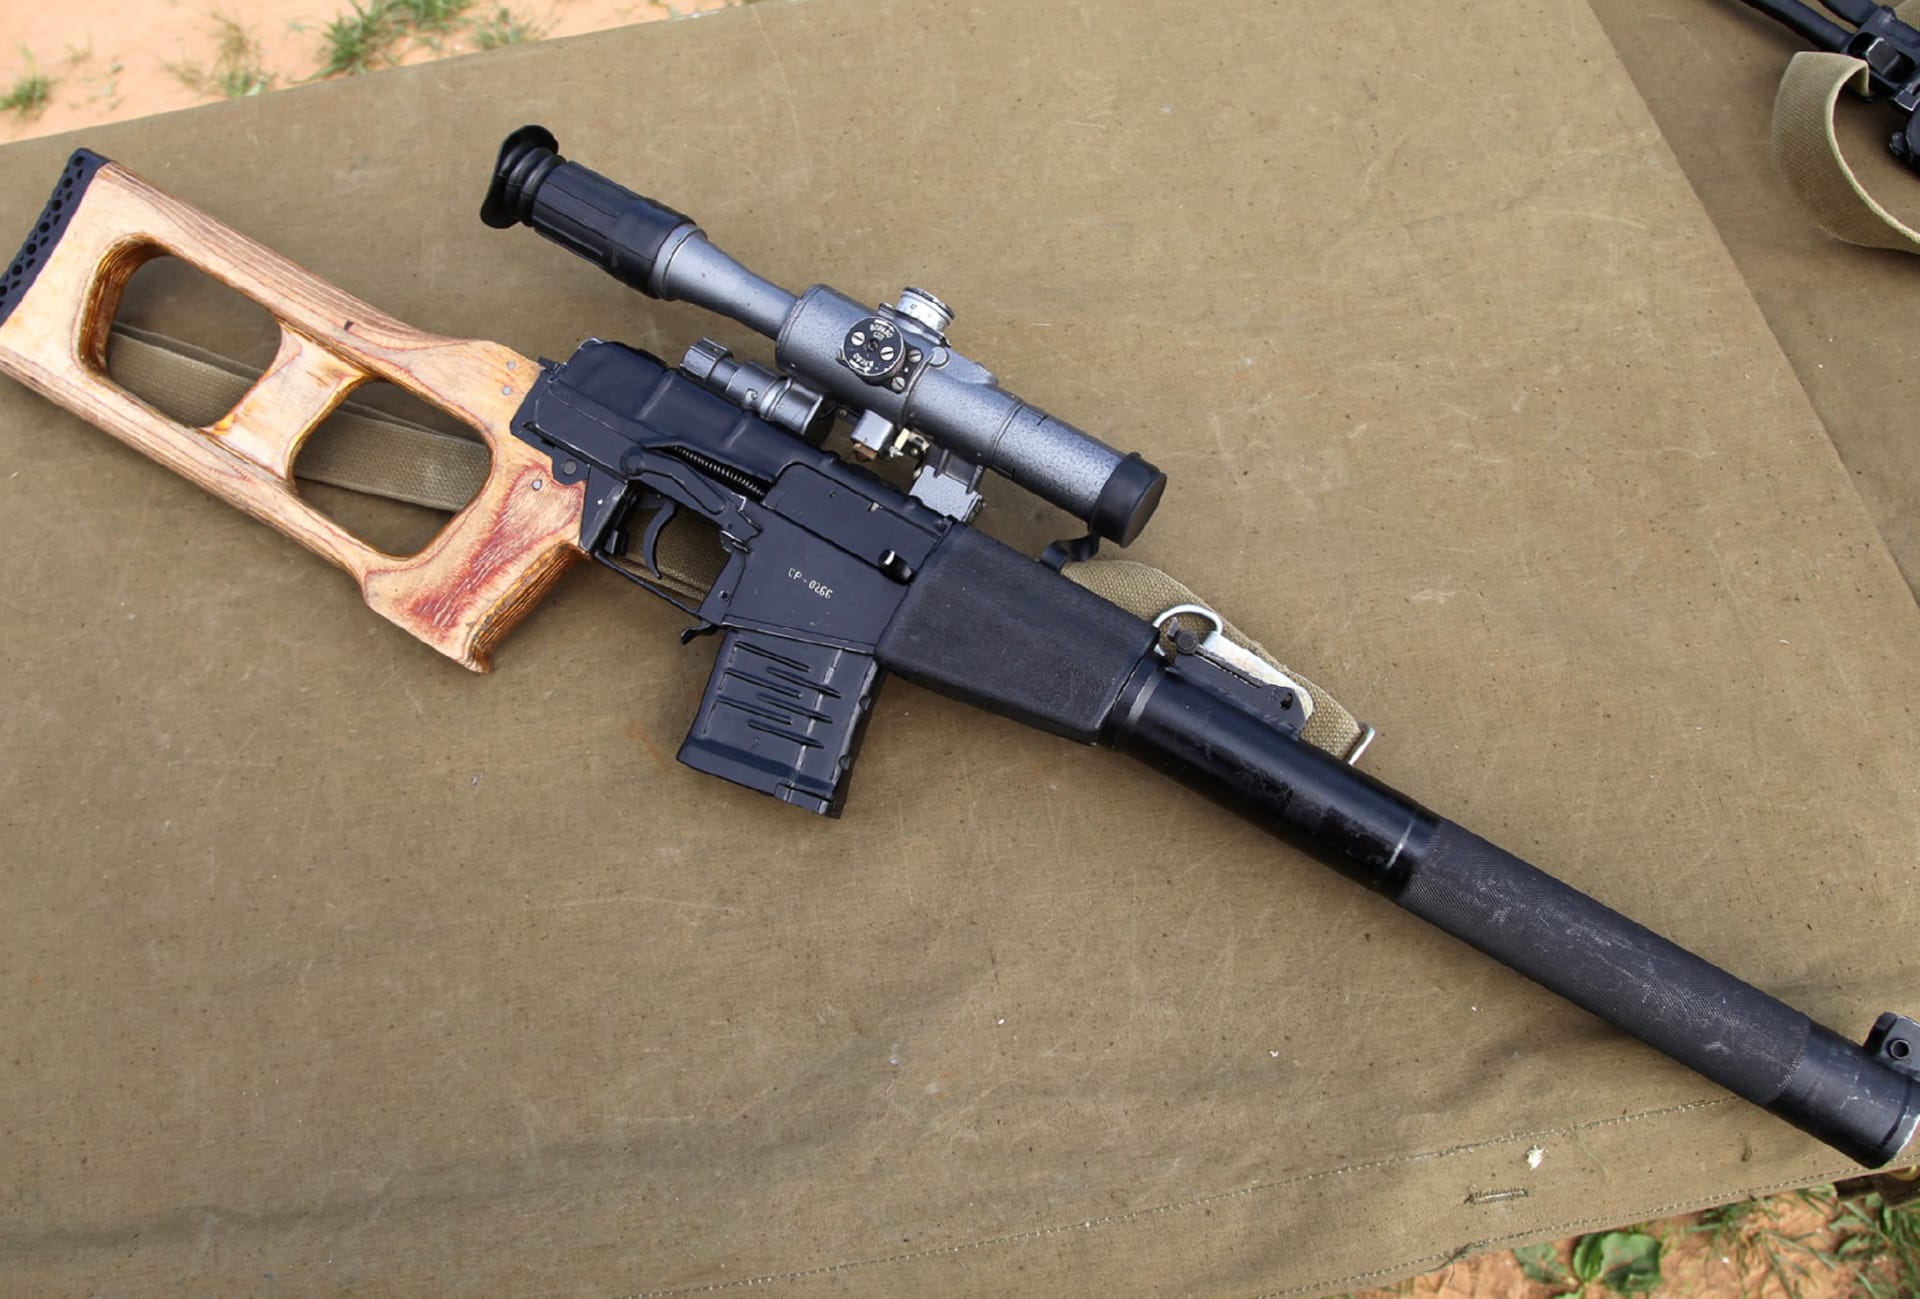 VSS Vintorez sniper rifle at 1280 x 960 size wallpapers HD quality